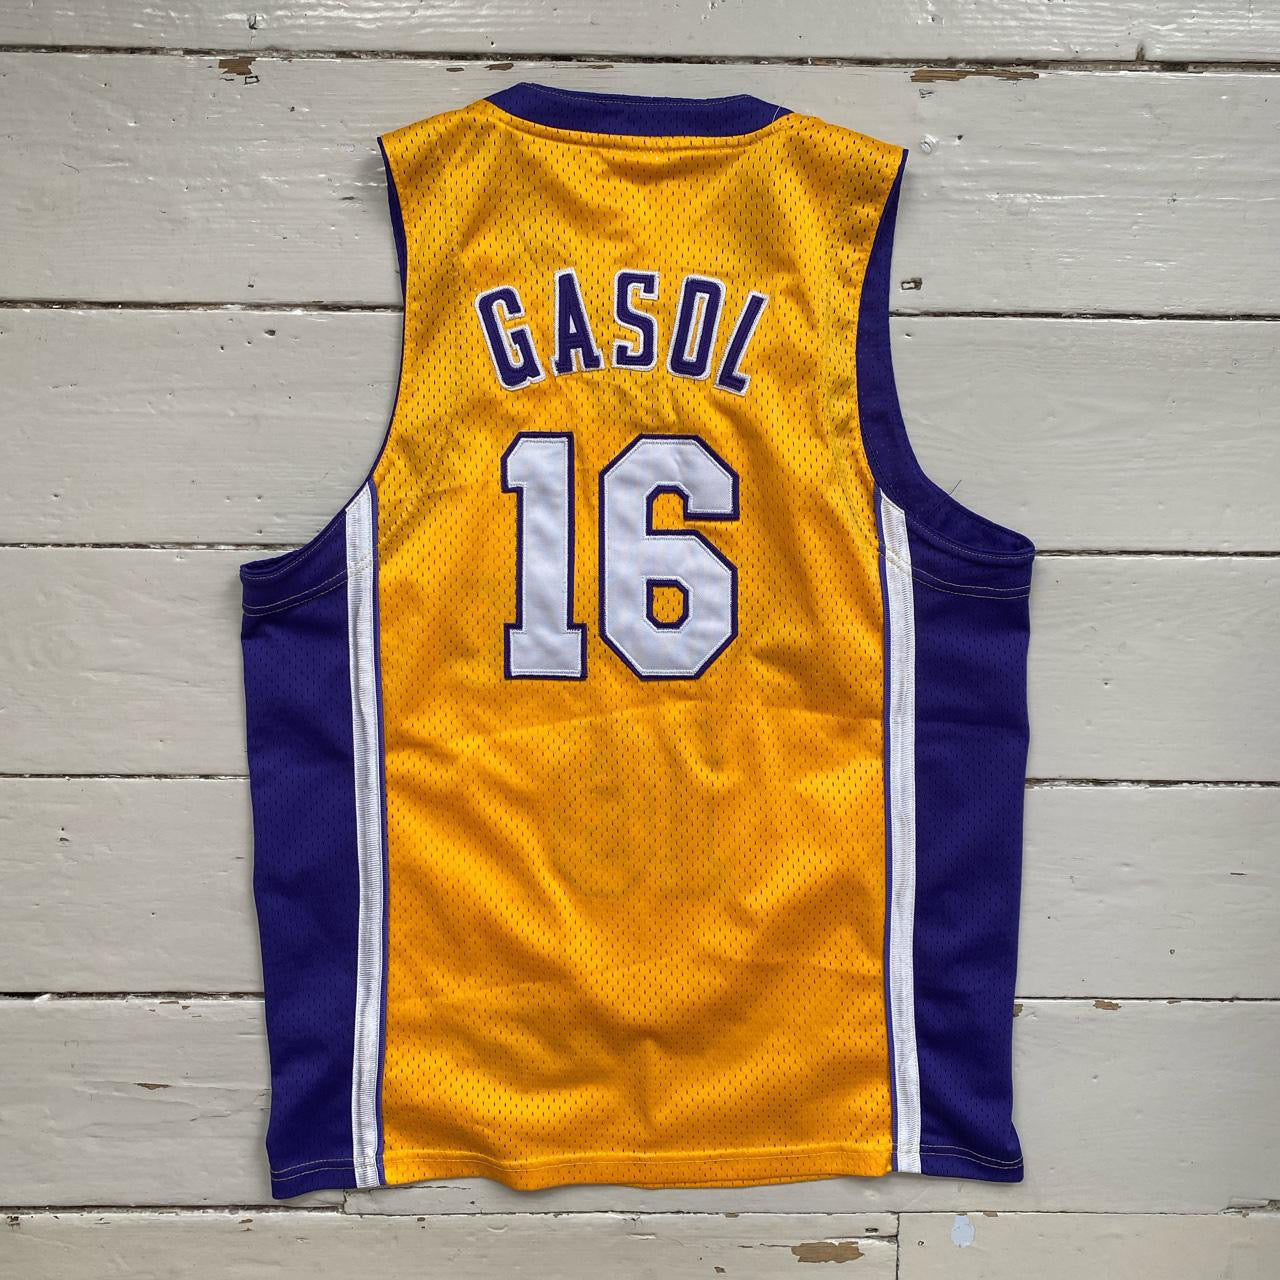 LA Lakers Gasol Jersey and Shorts (Medium)